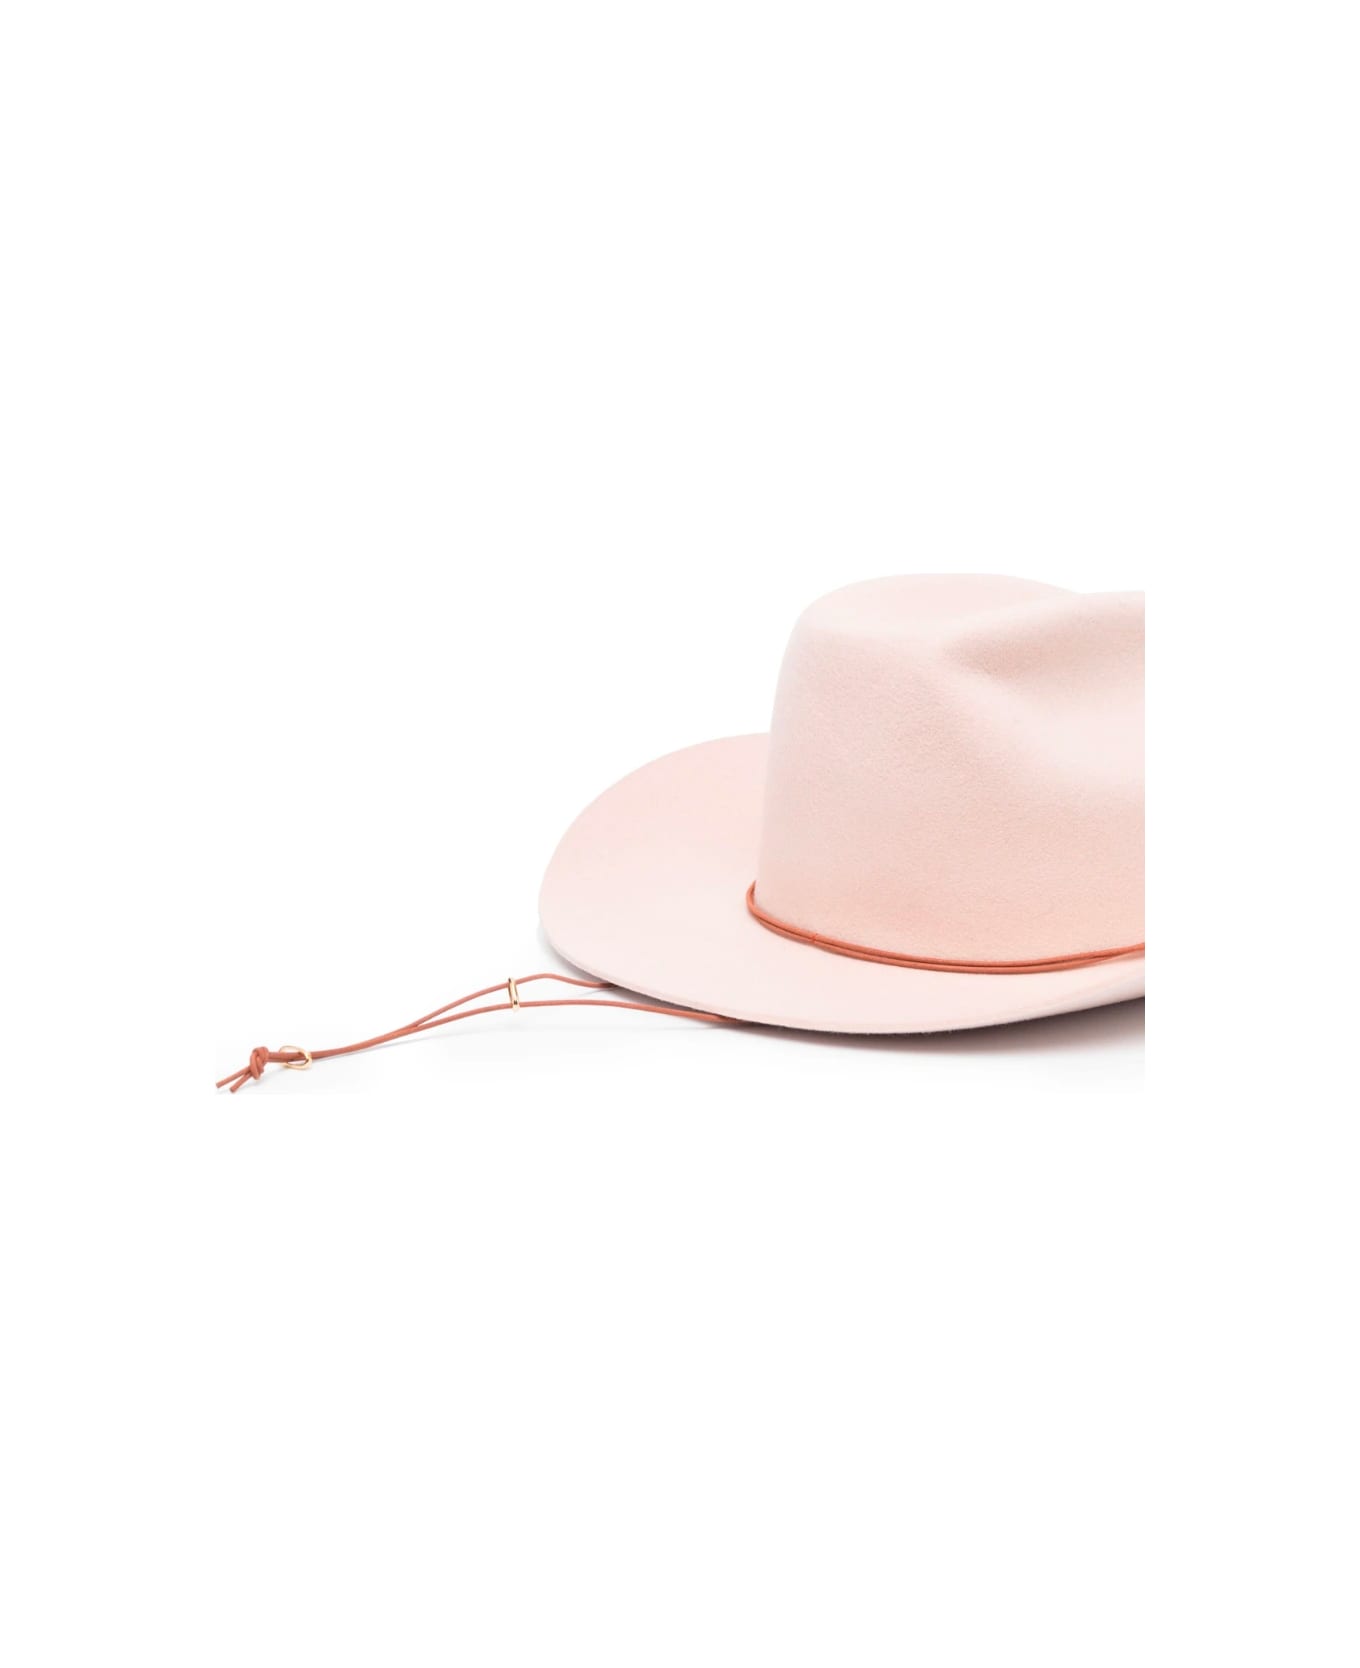 Van Palma Ezra Wool Hat - Baby Pink 帽子